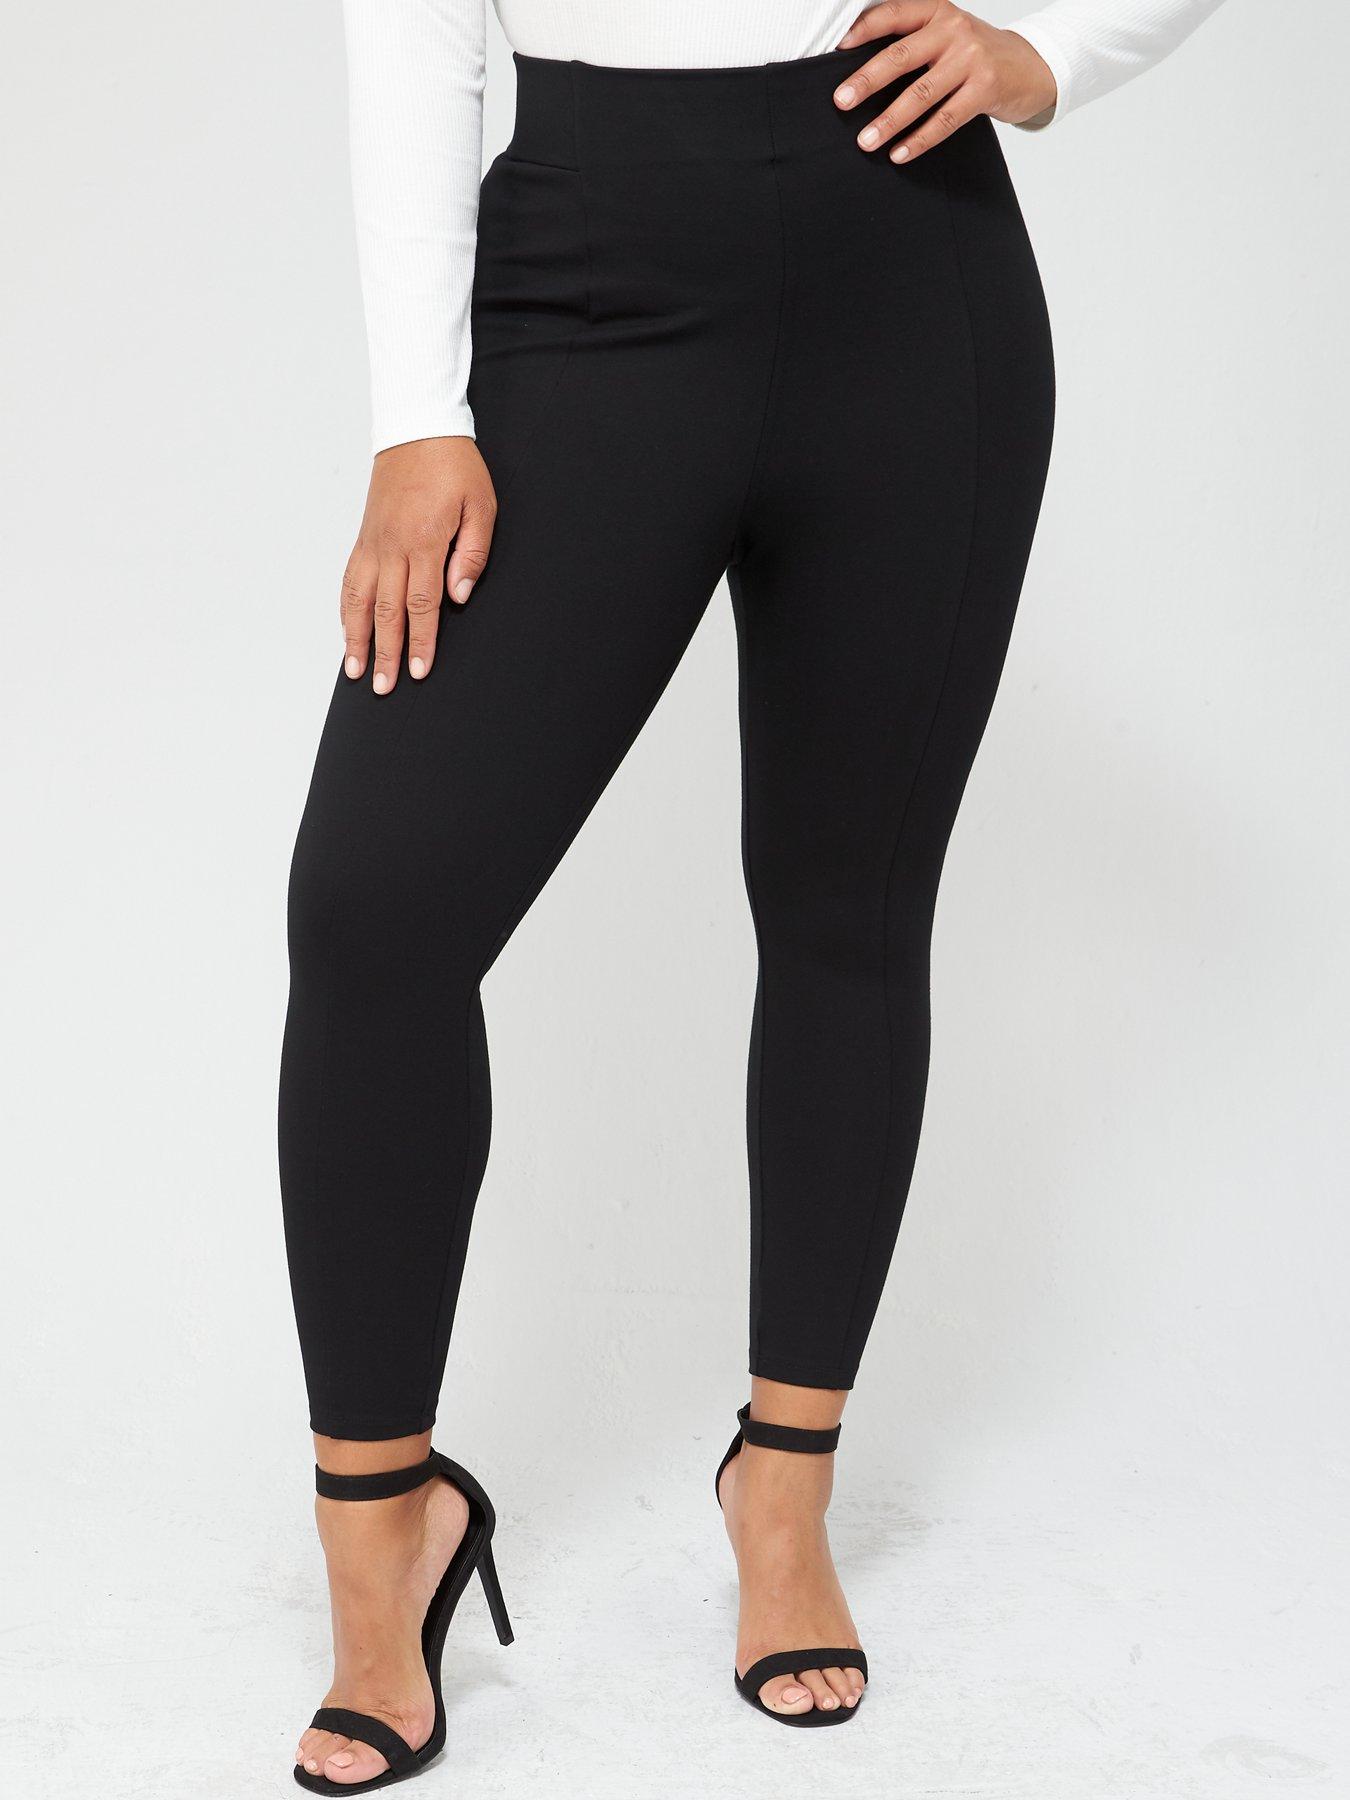 $205 Skechers Women's Black Stretch High-Rise Pull-On Legging Pants Size M